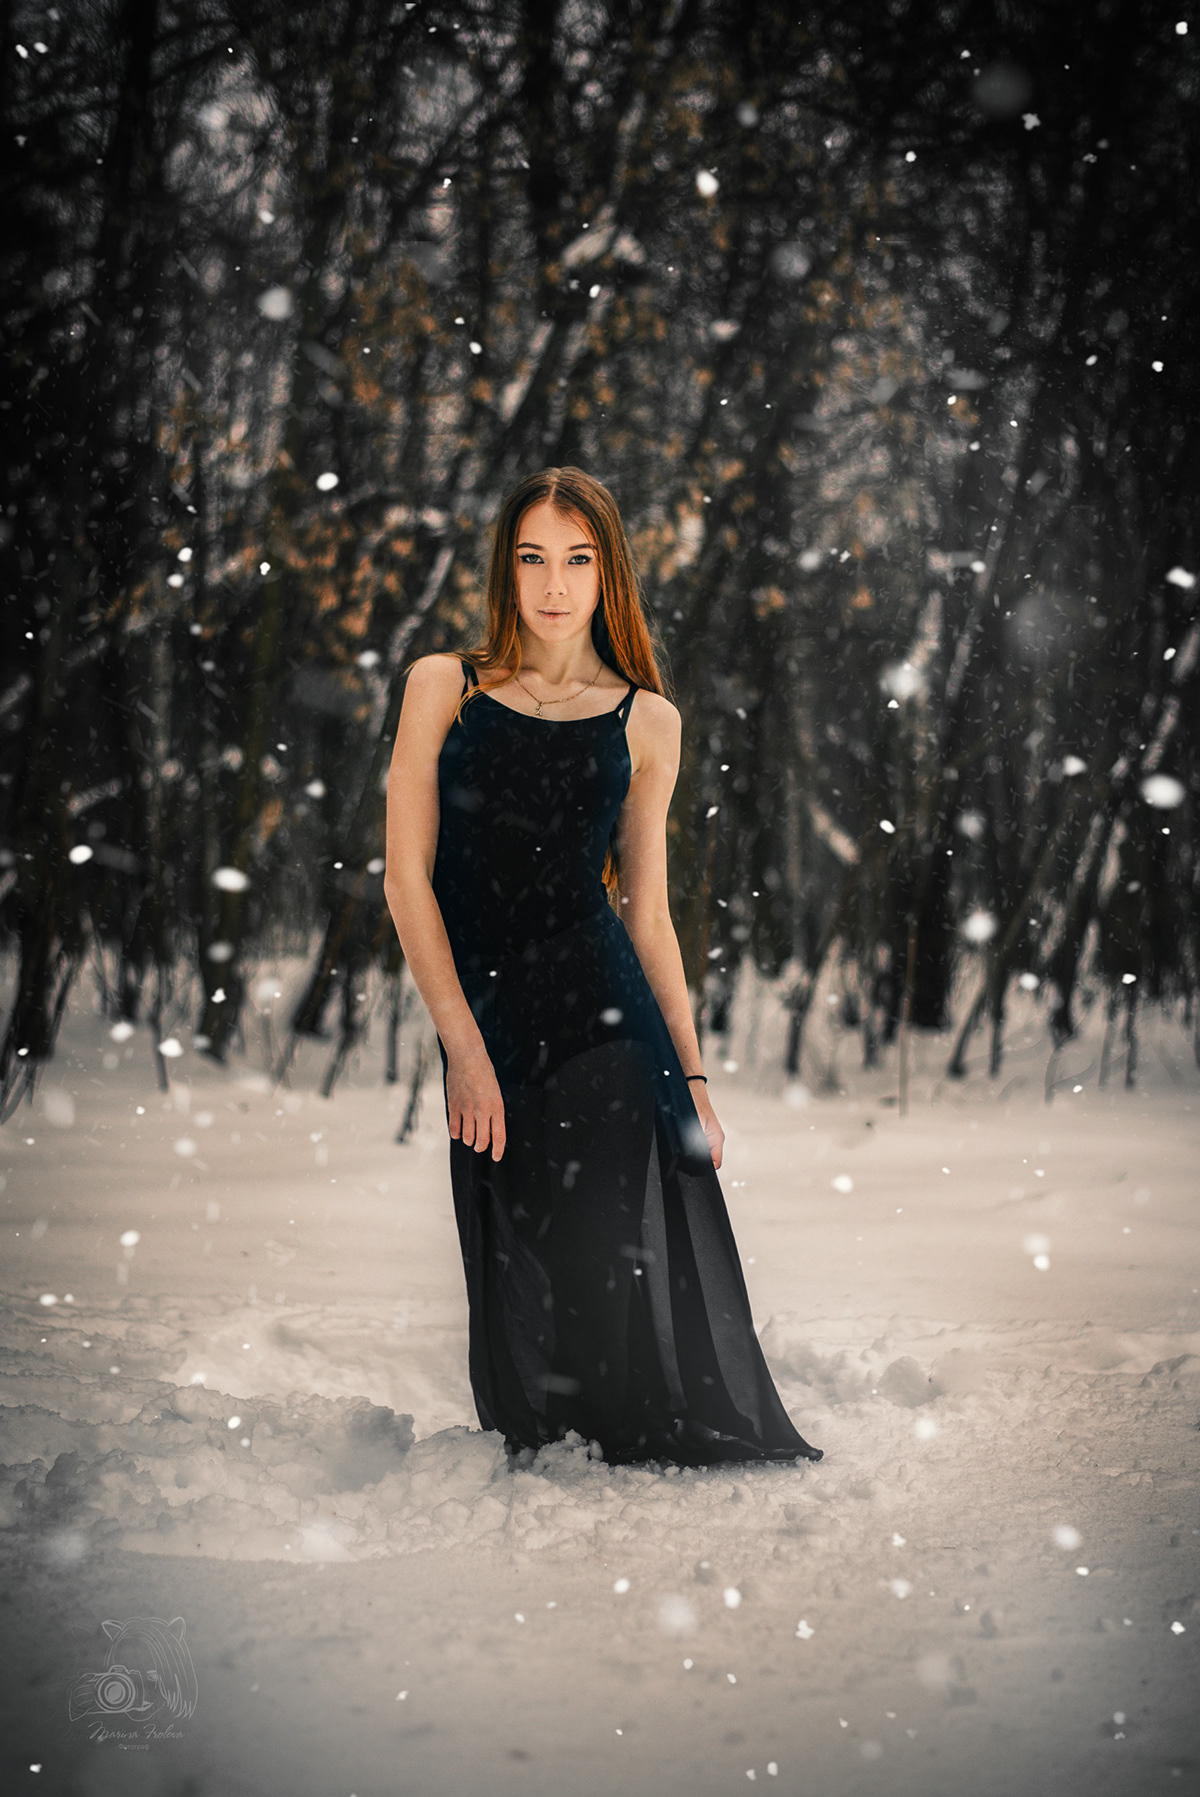 Adobe Portfolio DANCE   dancer dancing snow forest black dress beautiful girl